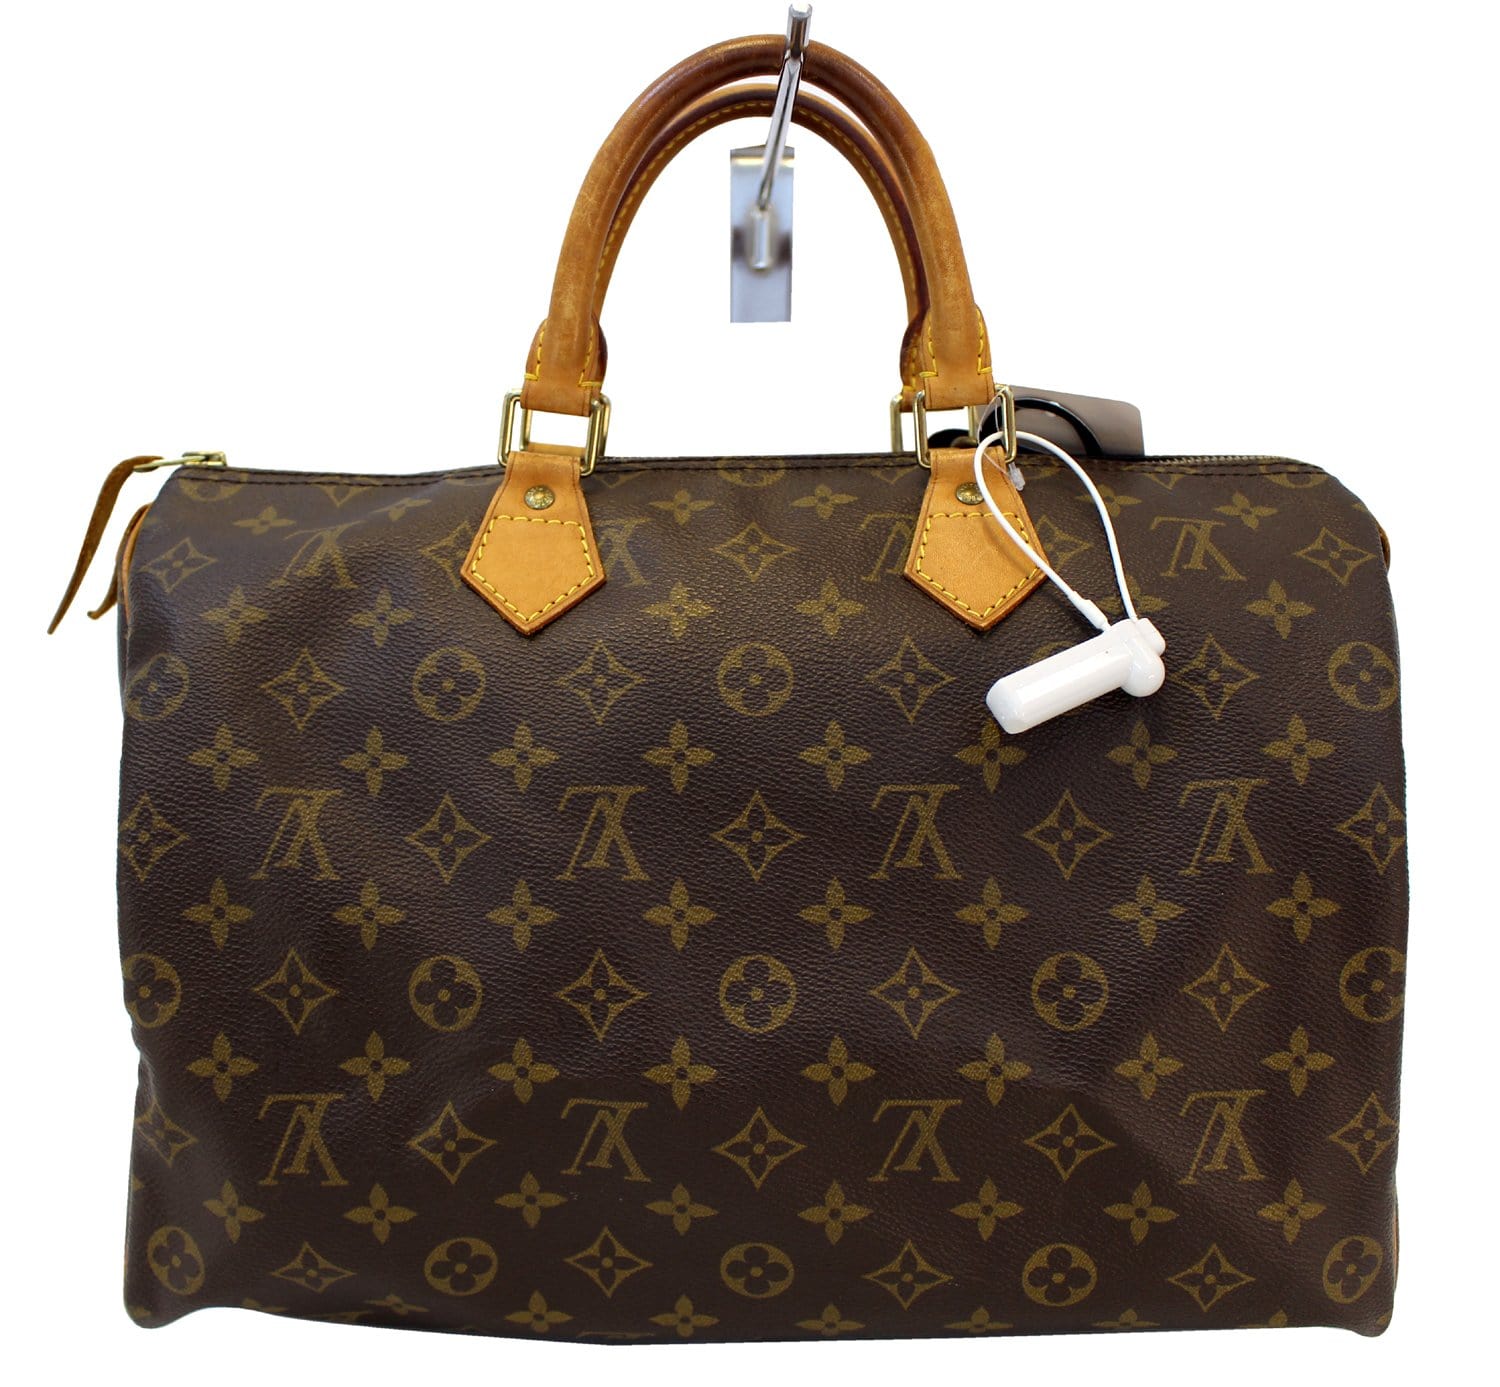 Louis Vuitton Limited Edition Speedy 35 Monogramouflage Handbag  Louis  vuitton handbags, Louis vuitton limited edition, Vuitton handbags